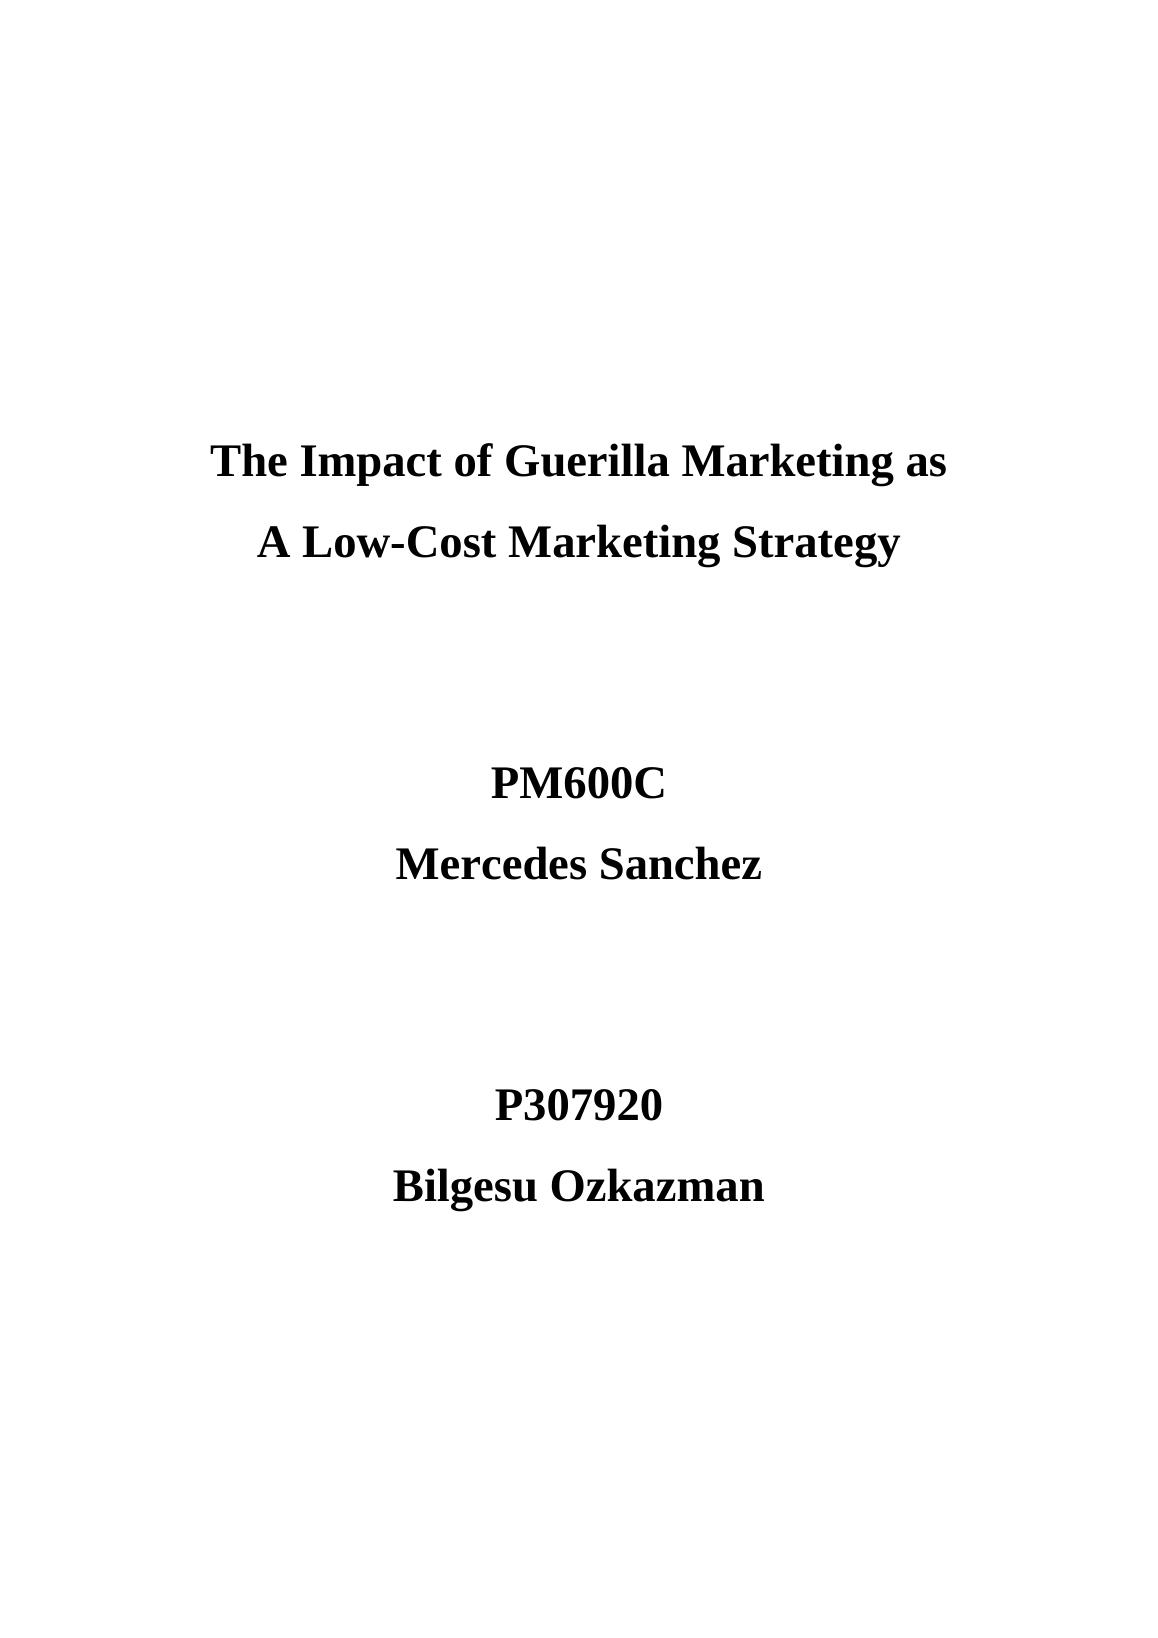 Impact of Guerilla Marketing  Assignment_1